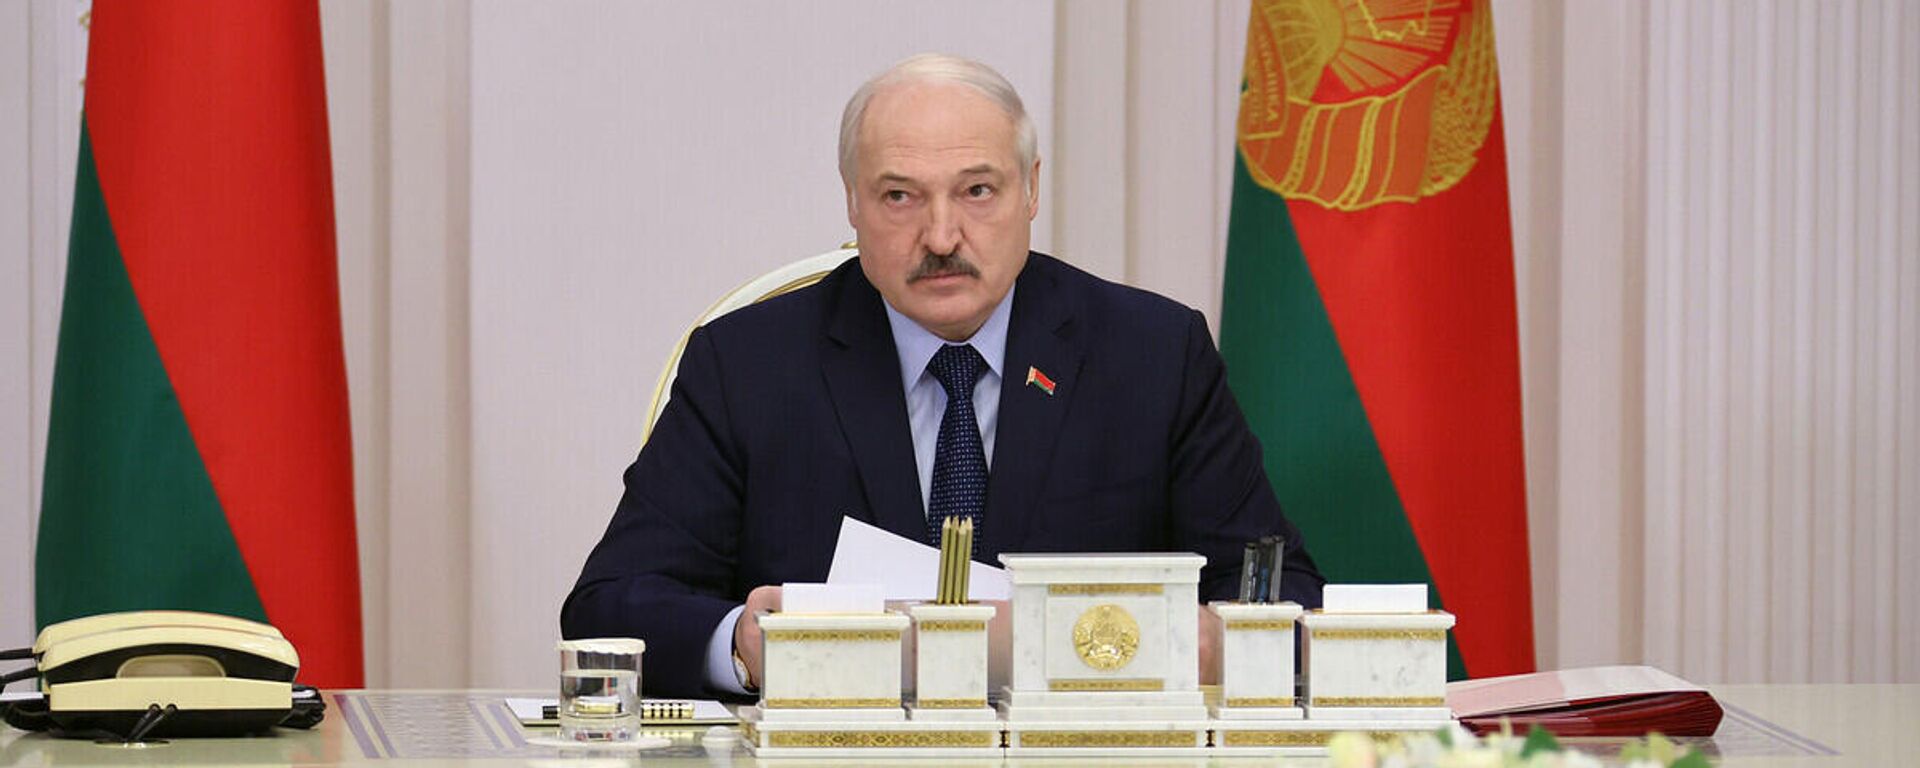 Президент Белоруссии Александр Лукашенко - Sputnik Литва, 1920, 22.12.2021